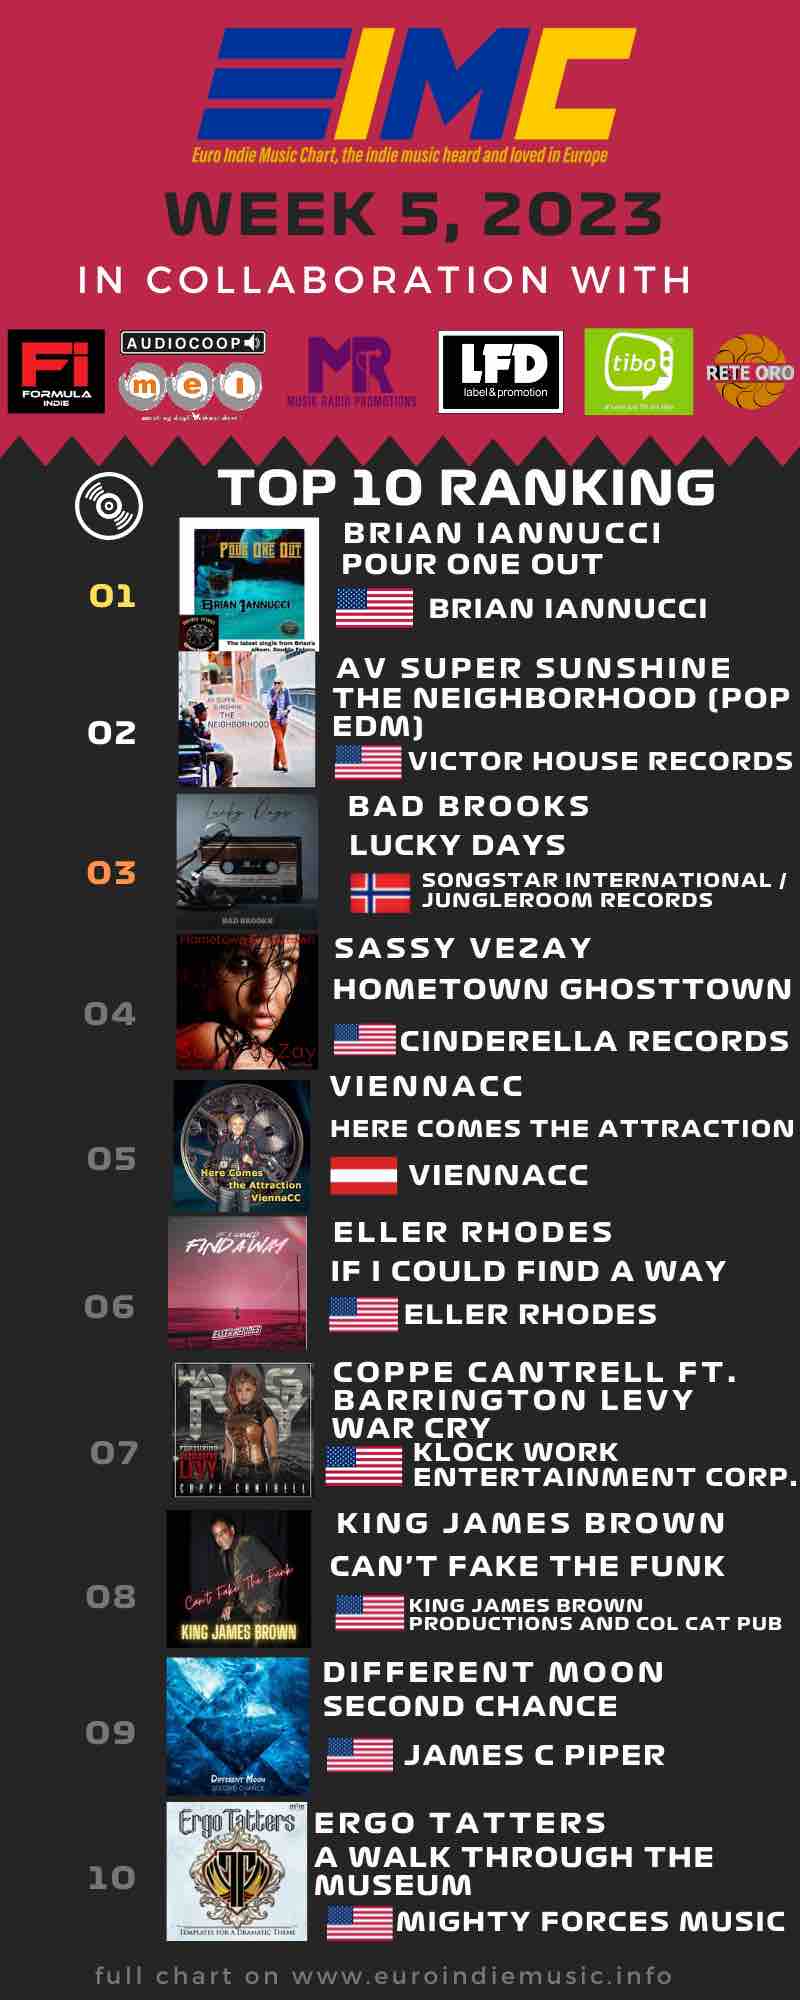 Nuova Euro Indie Music Chart: In testa Brian Iannucci!